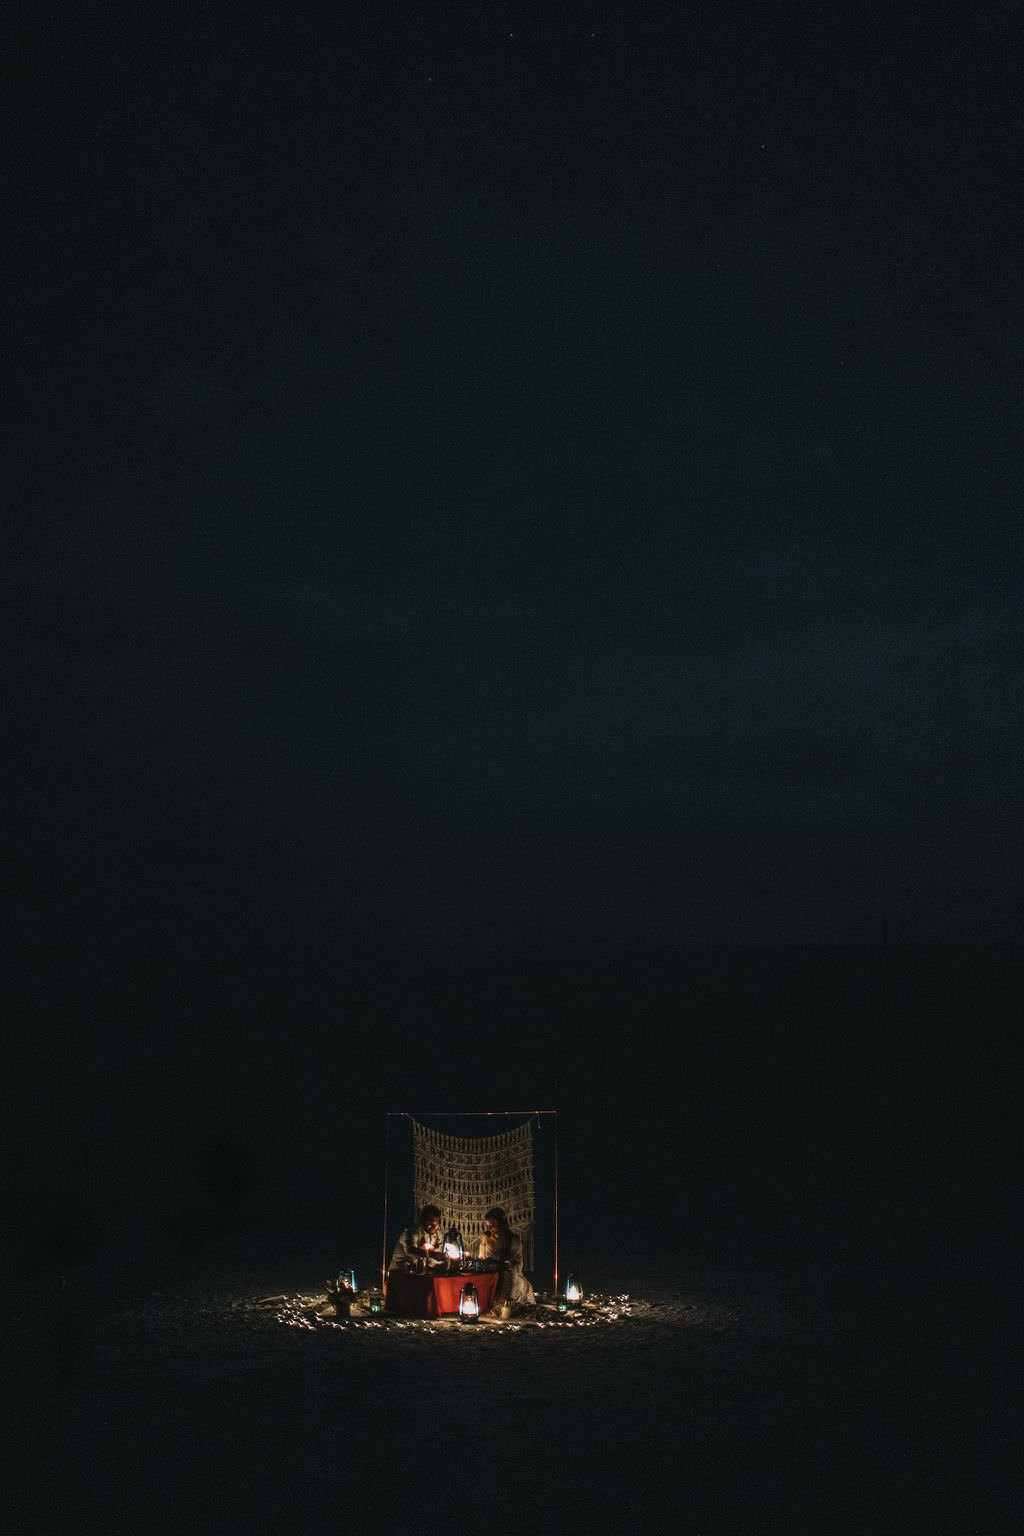 nighttime wedding in desert.